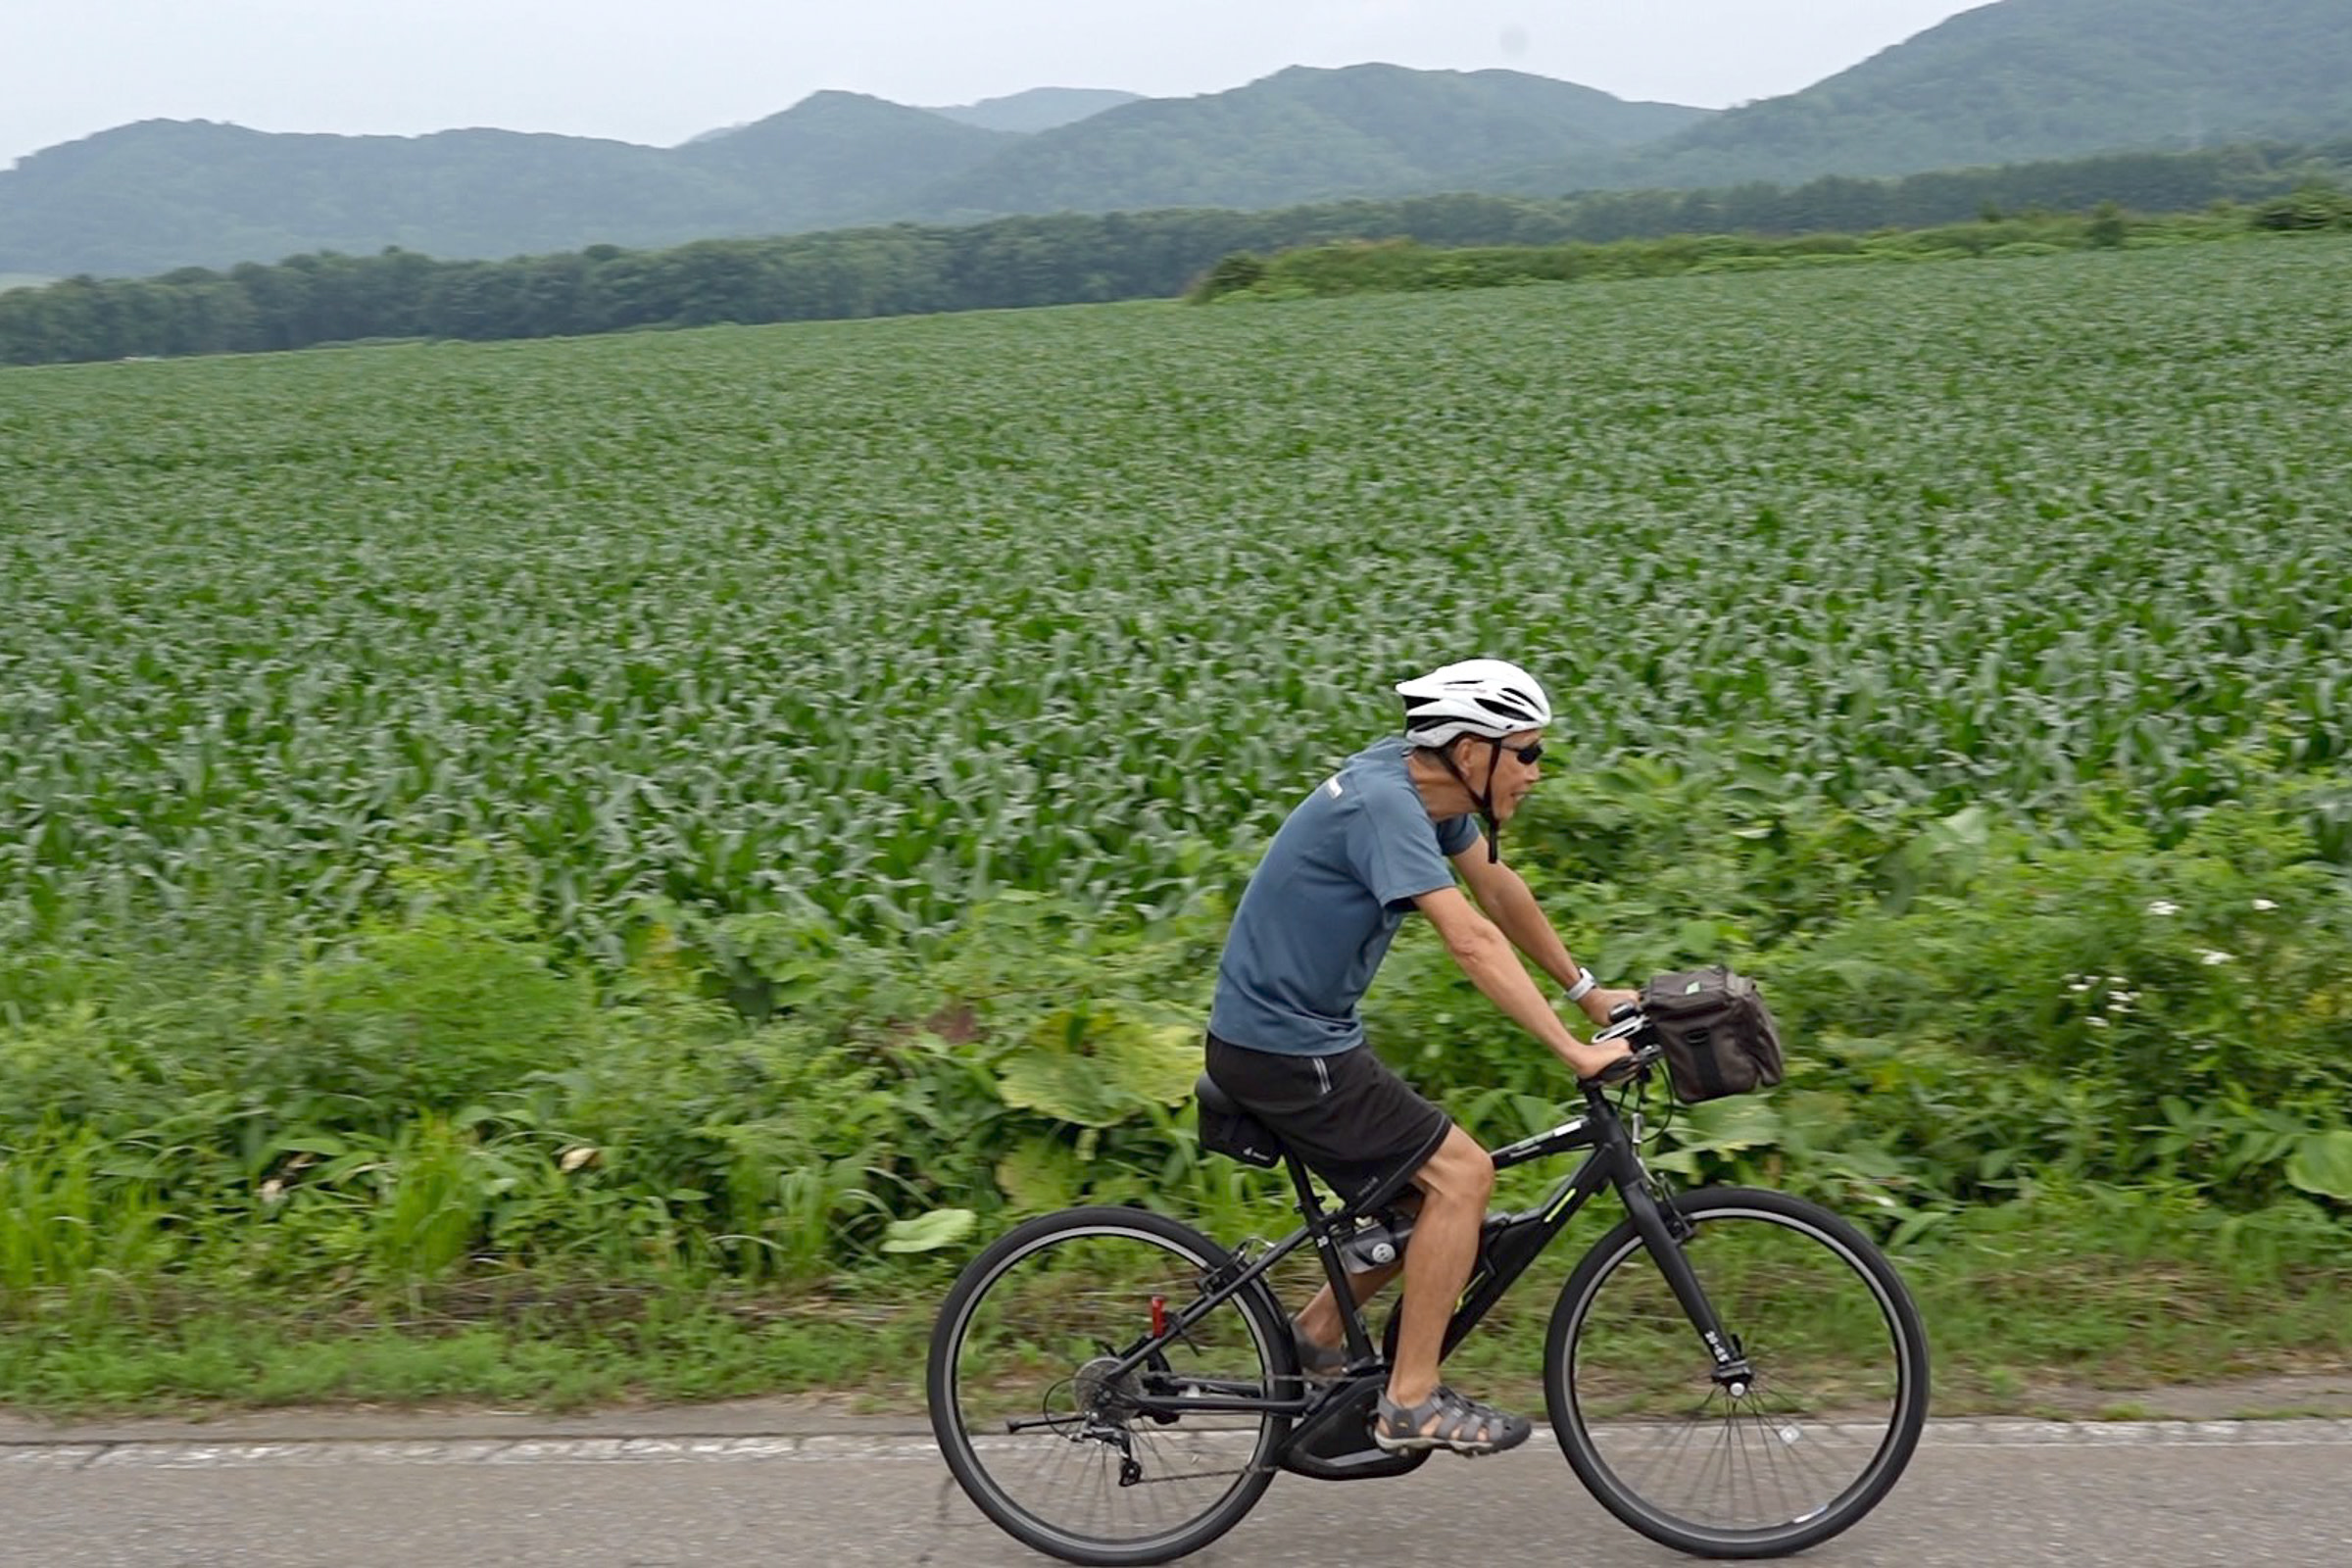 Cycling through a farming region in Central Hokkaido.